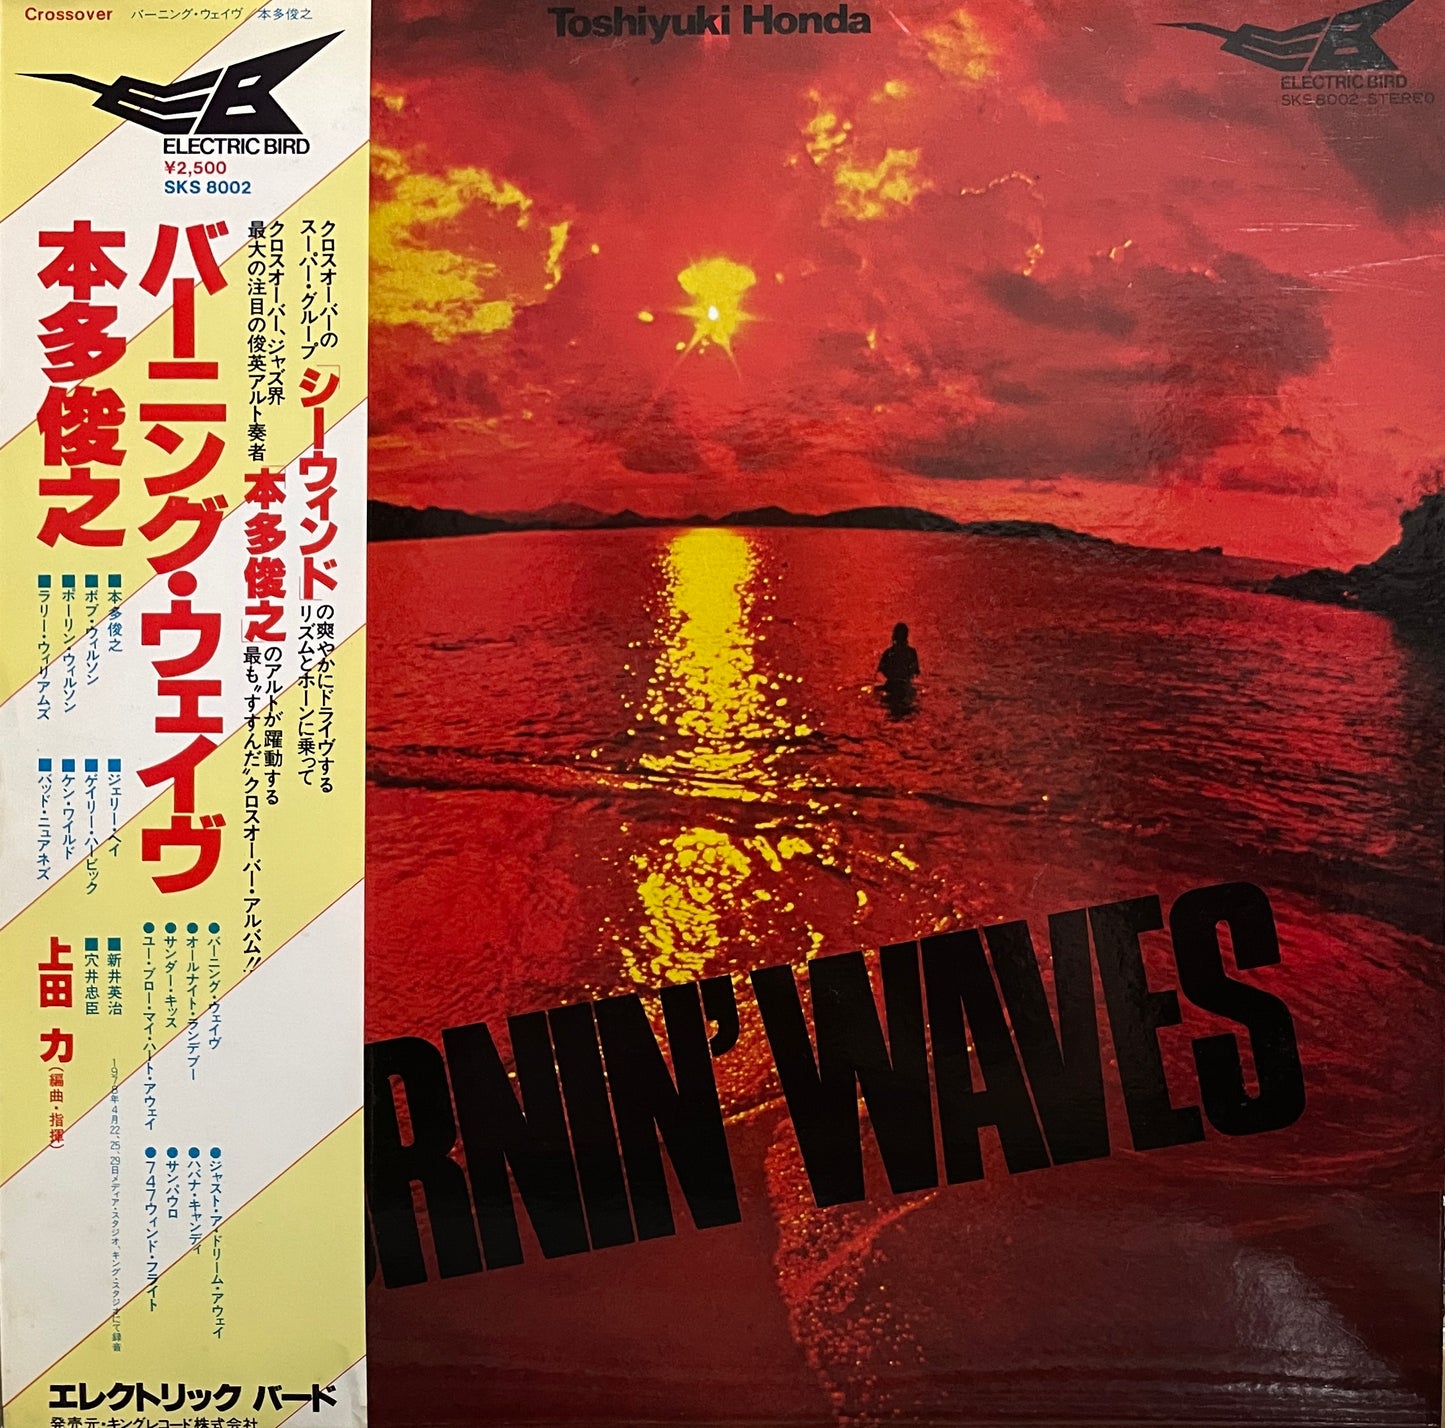 Toshiyuki Honda "Burnin' Waves" (1978)